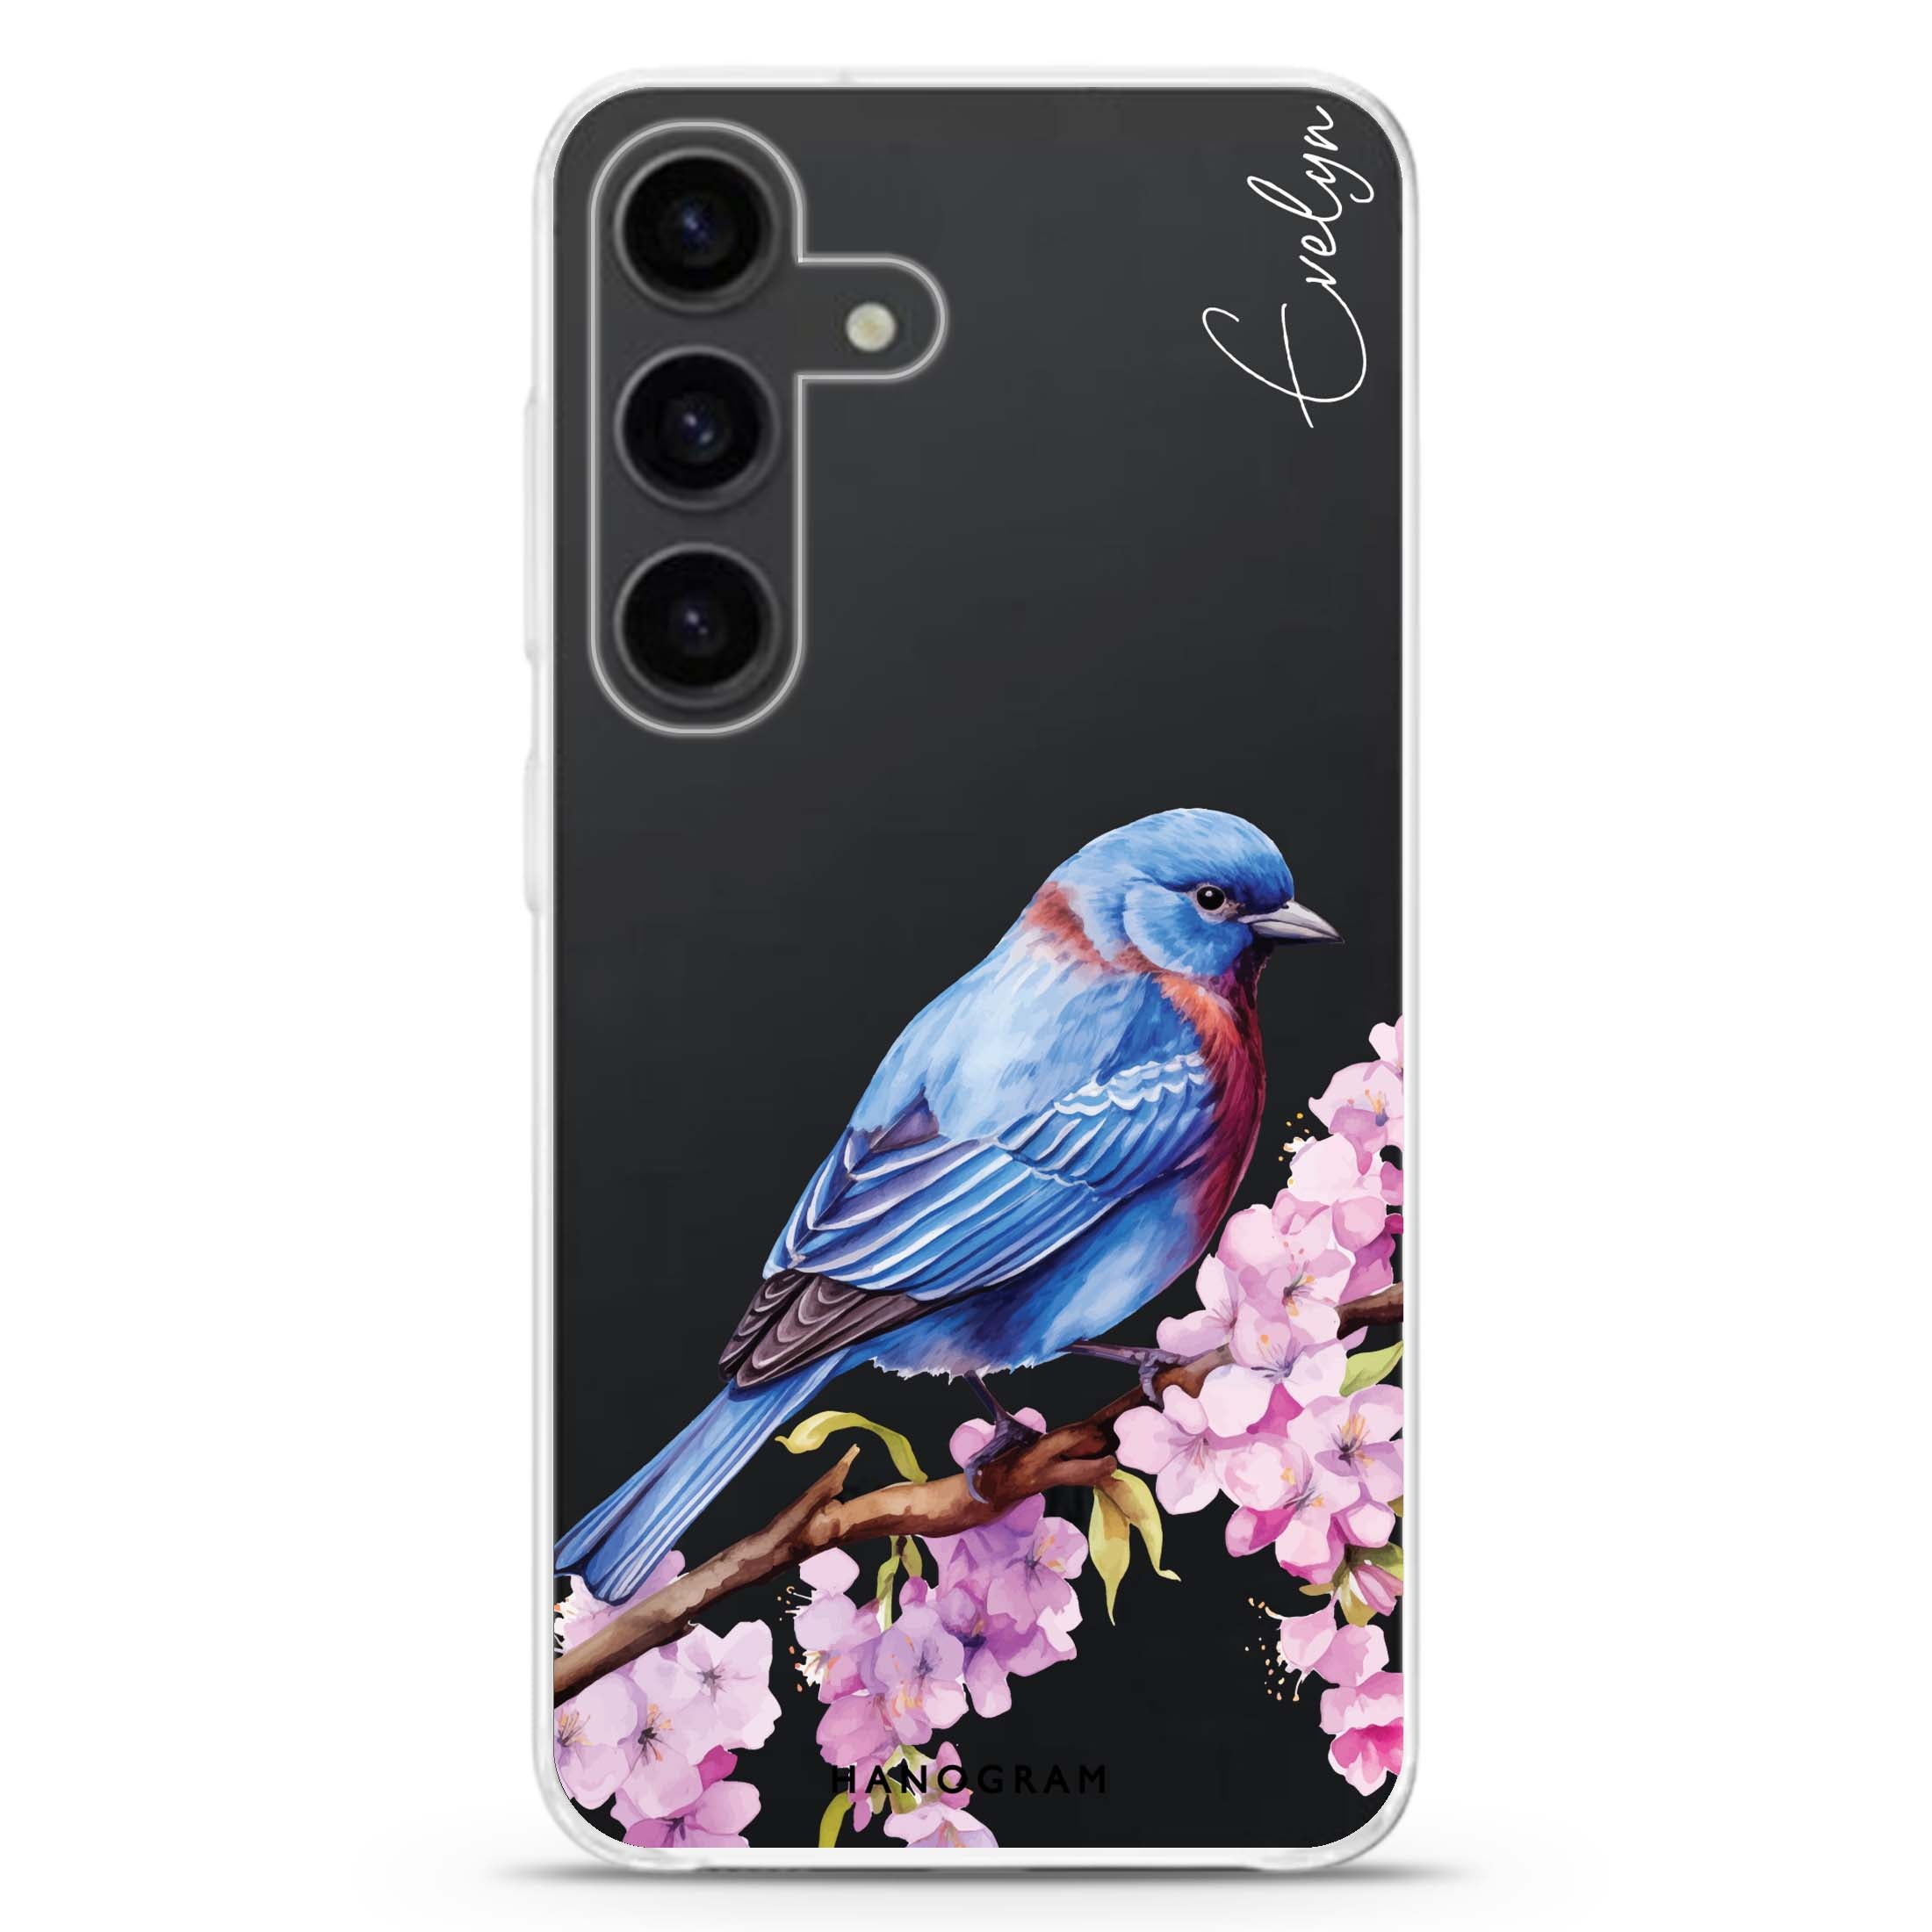 A watercolour floral Samsung Galaxy Ultra Clear Case